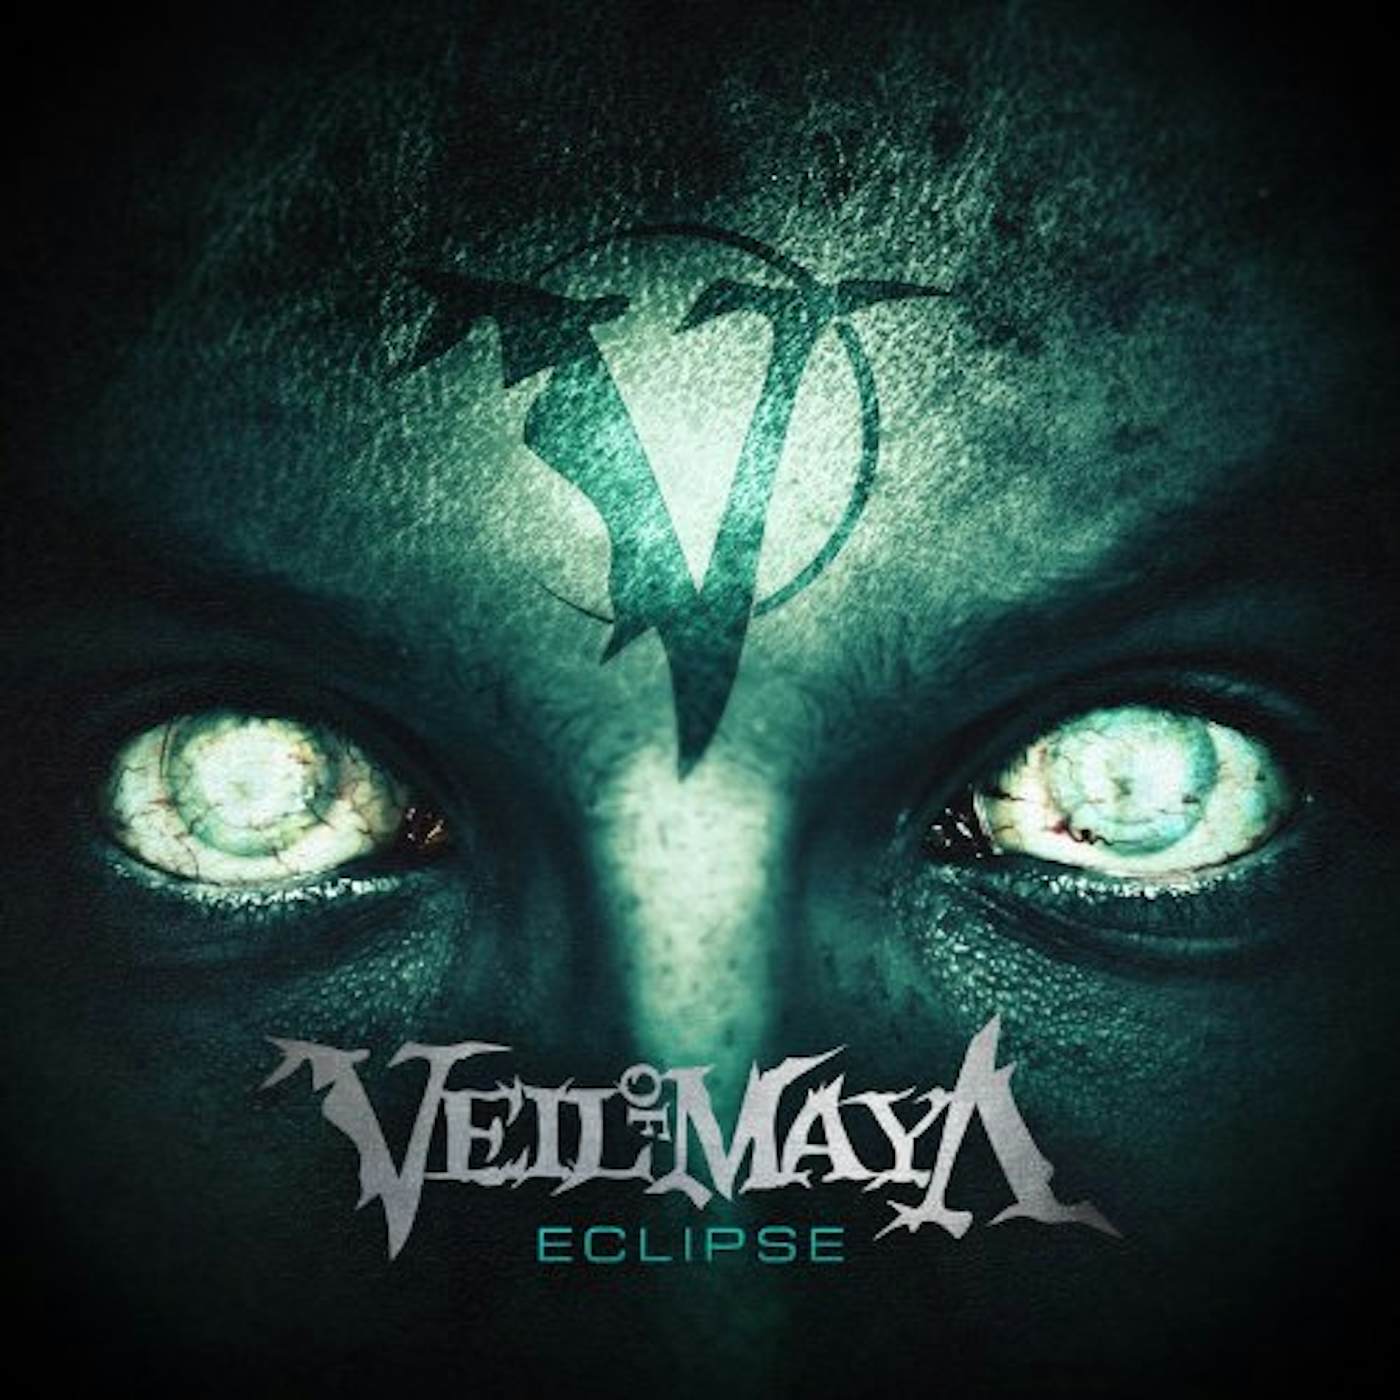 Veil Of Maya ECLIPSE CD